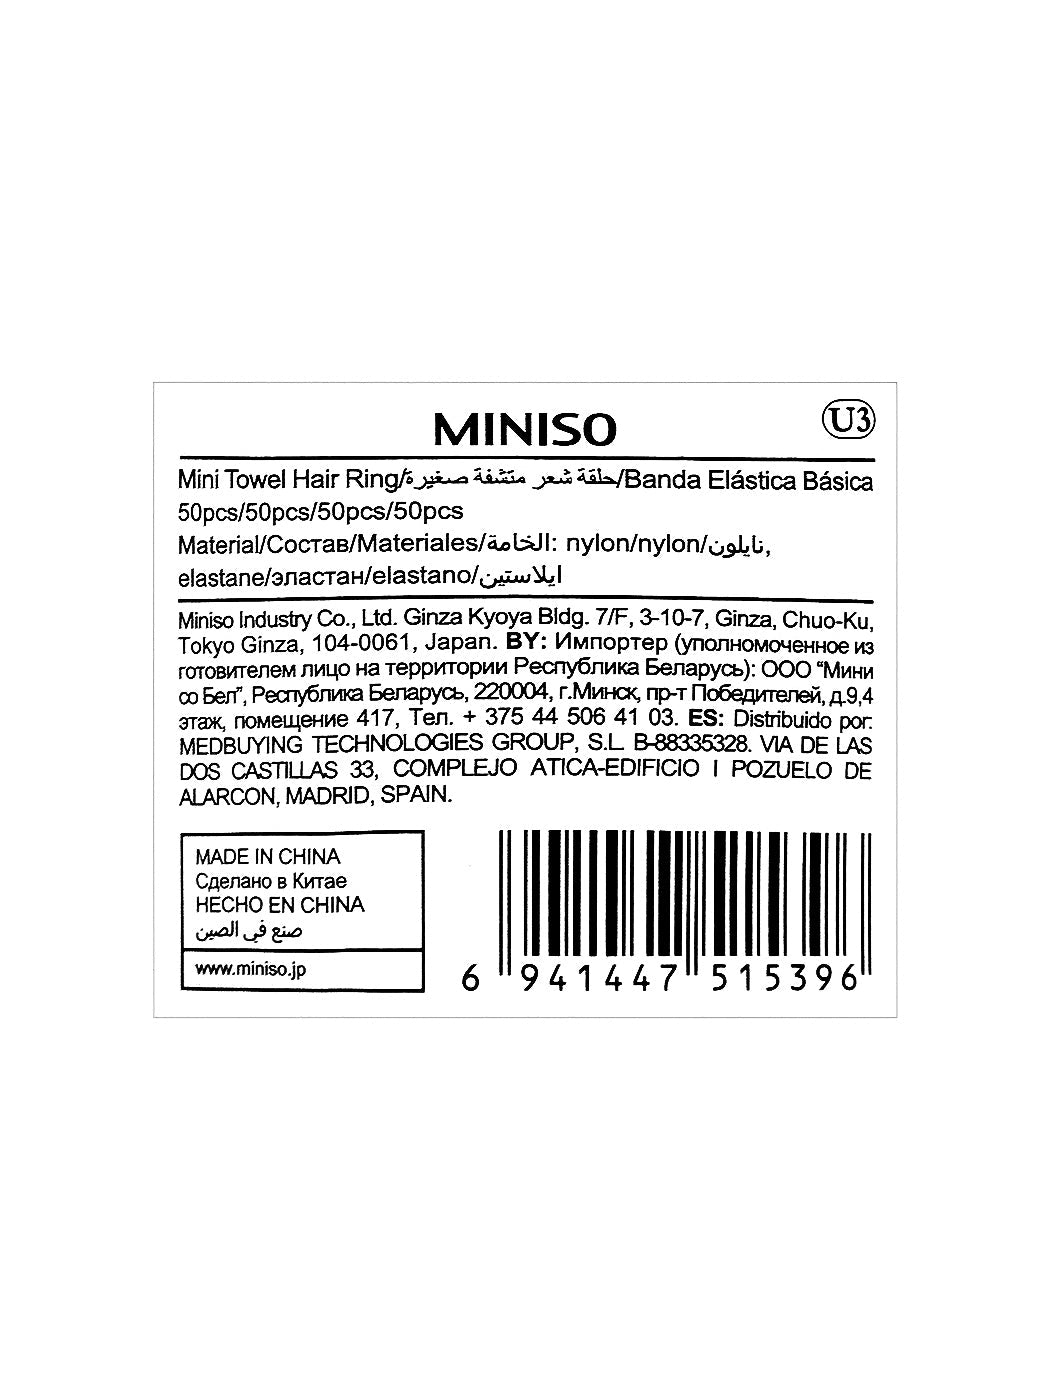 MINISO MINI TOWEL HAIR RING 2008626310105 RUBBER BAND